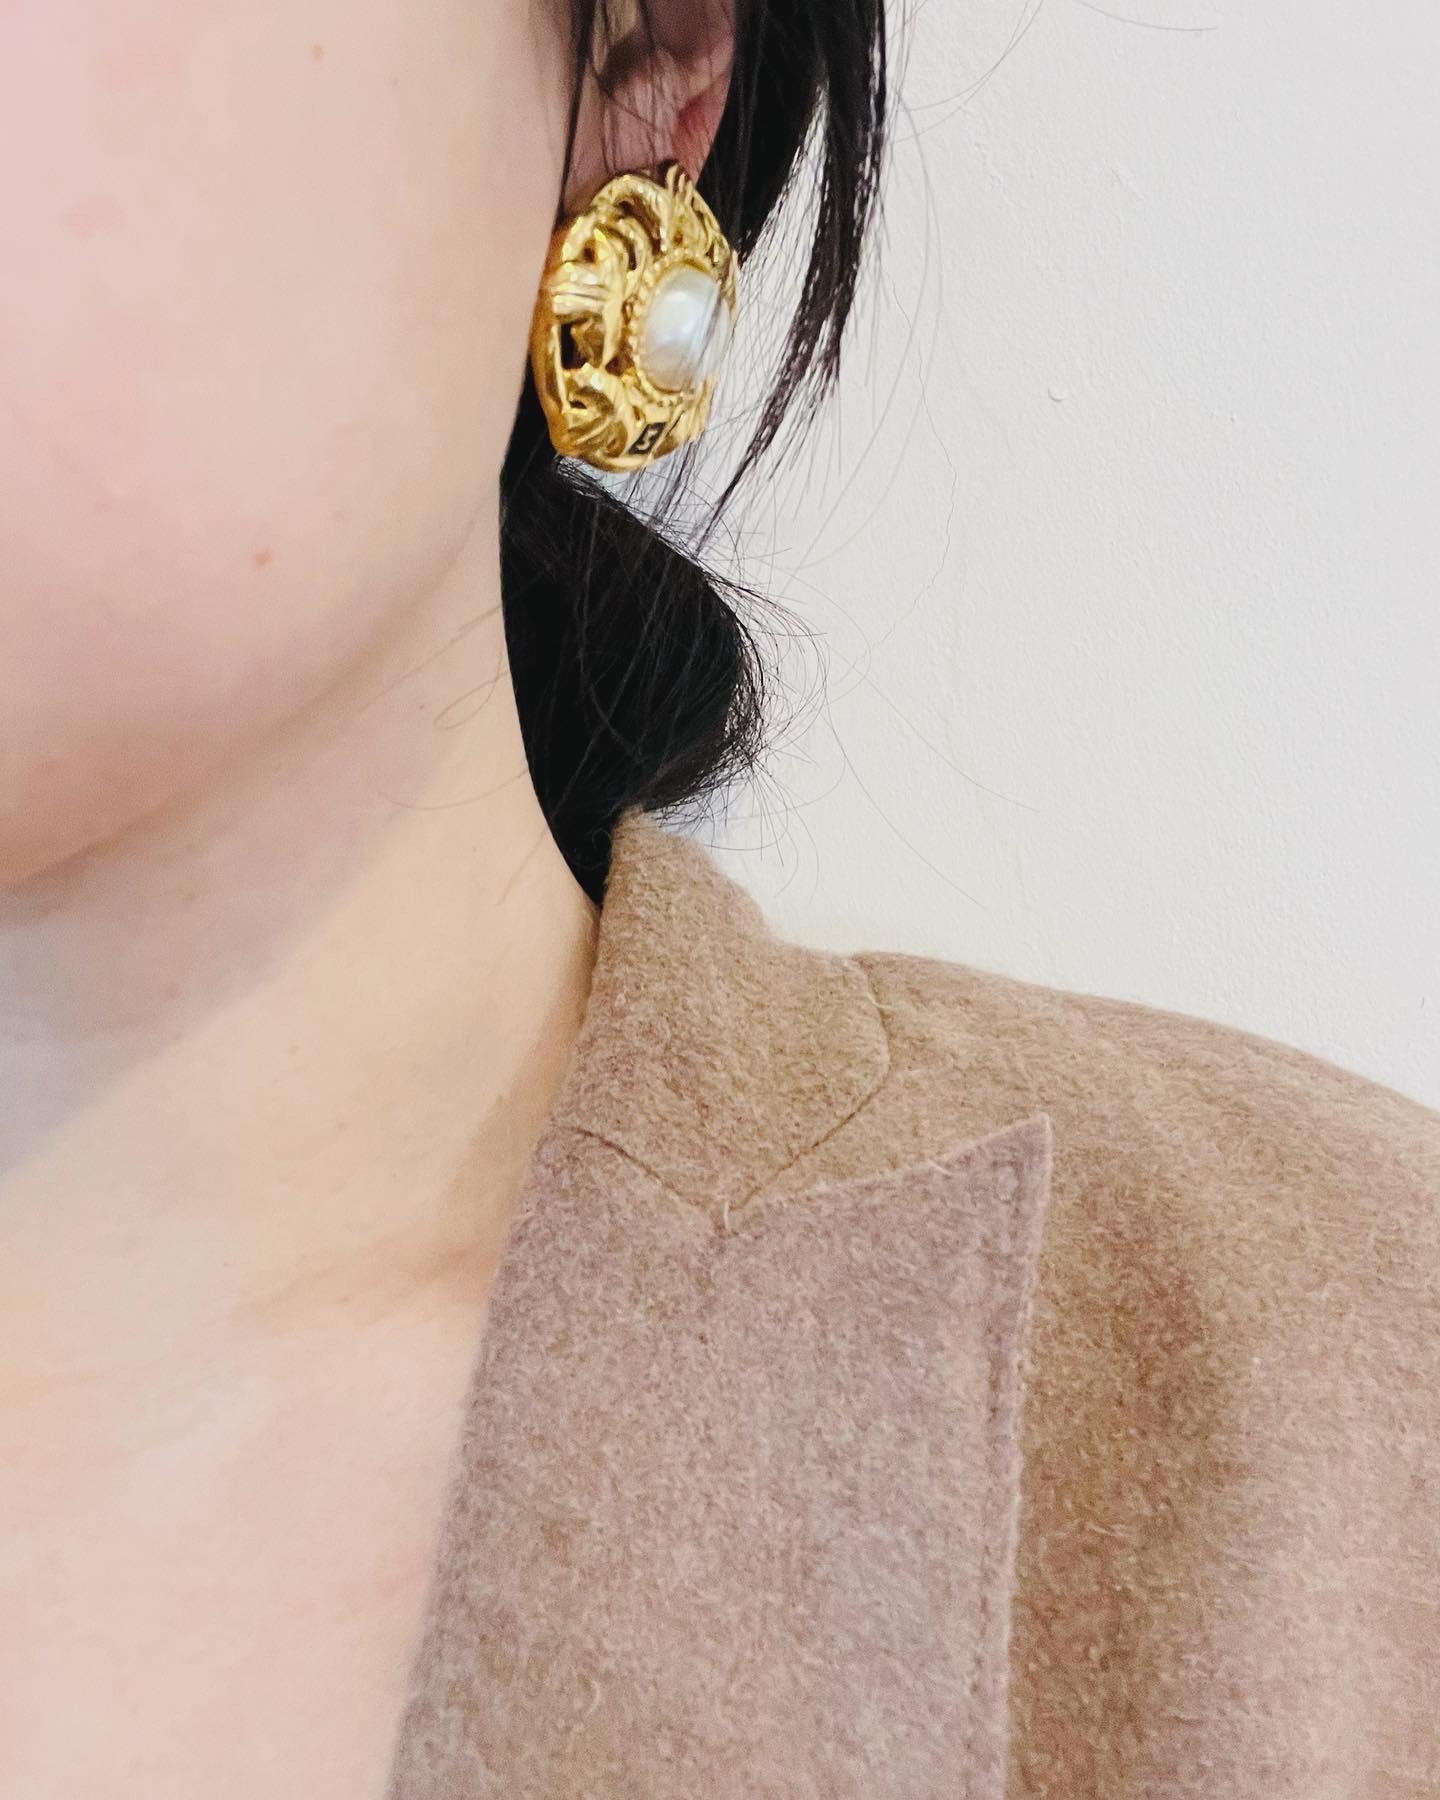 Aggregate more than 160 fendi earrings sale latest